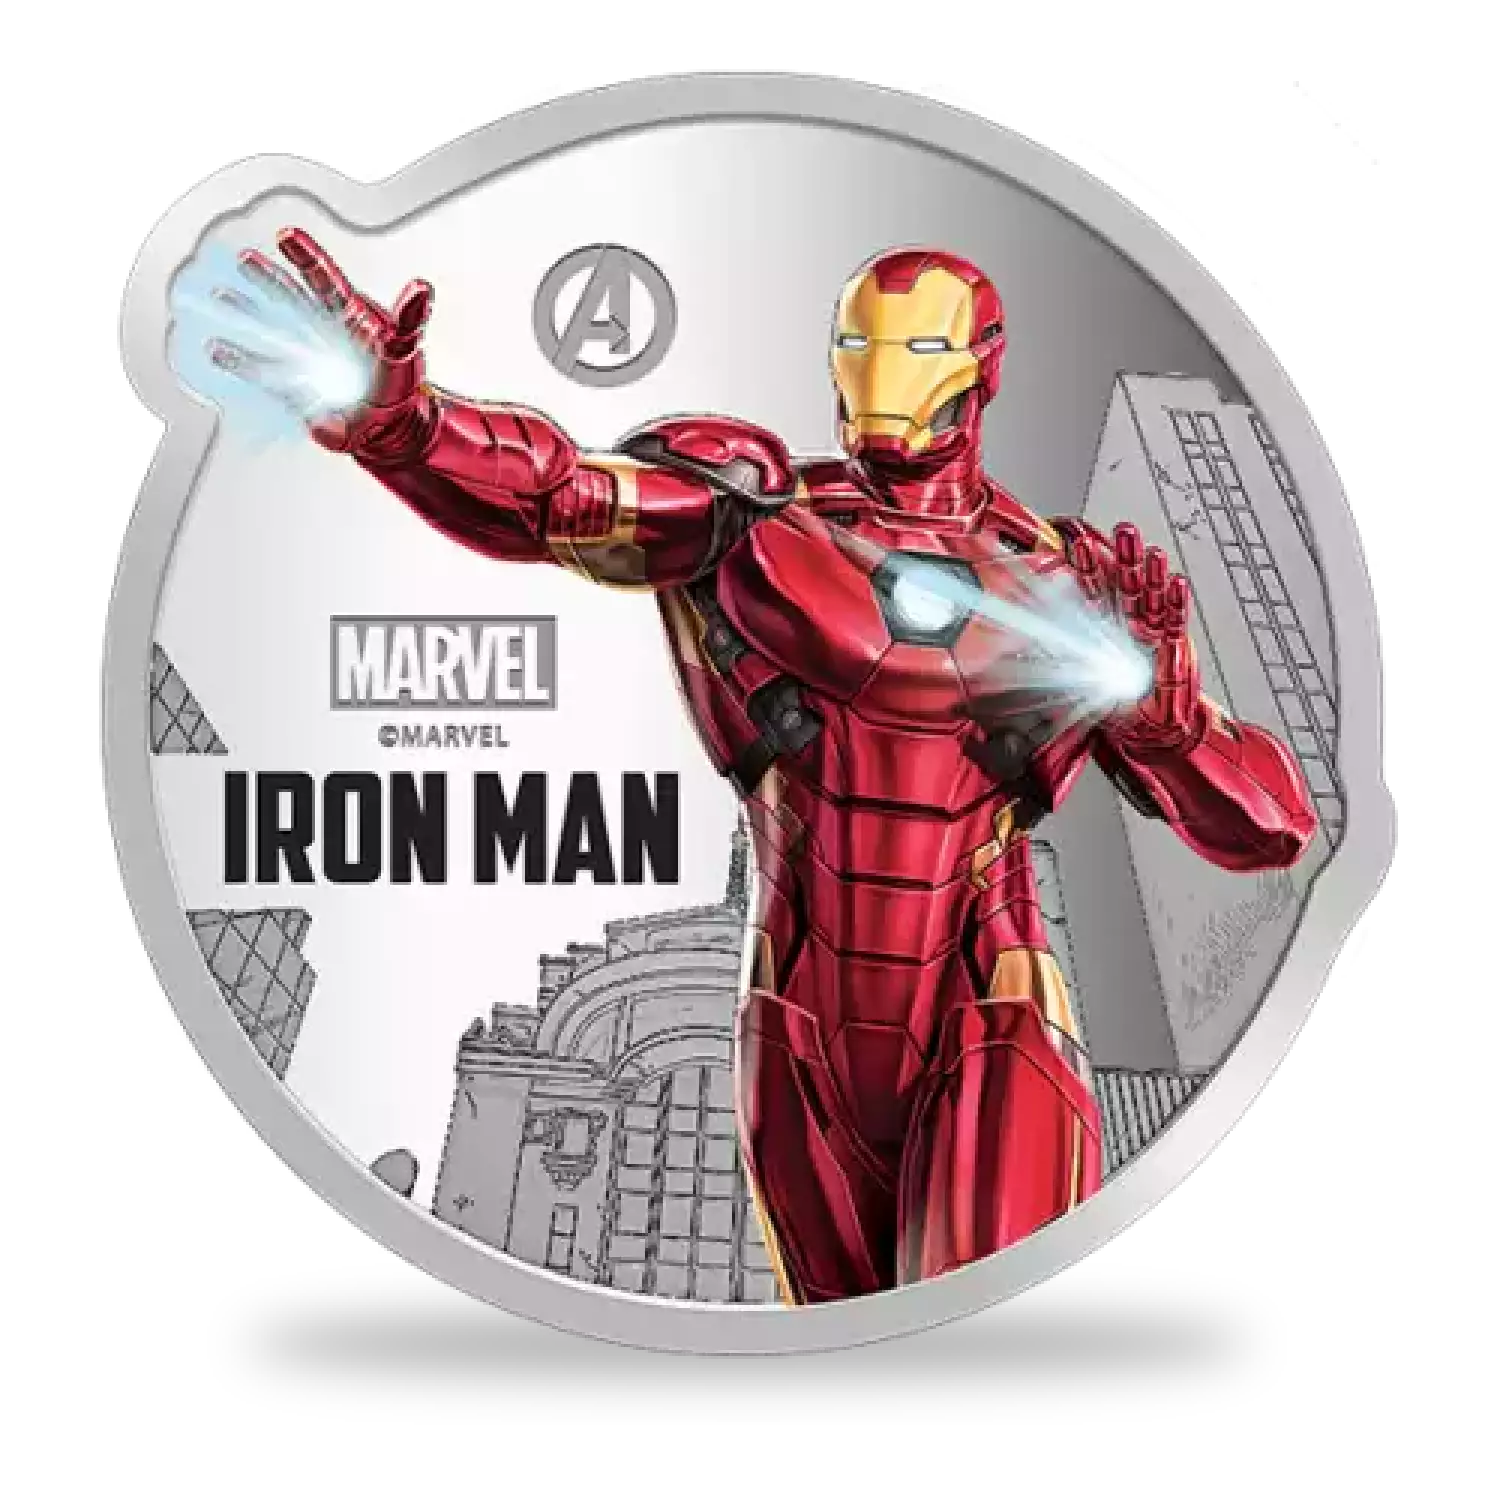 MMTC-PAMP Marvel Comics Iron Man 1oz Silver Coin